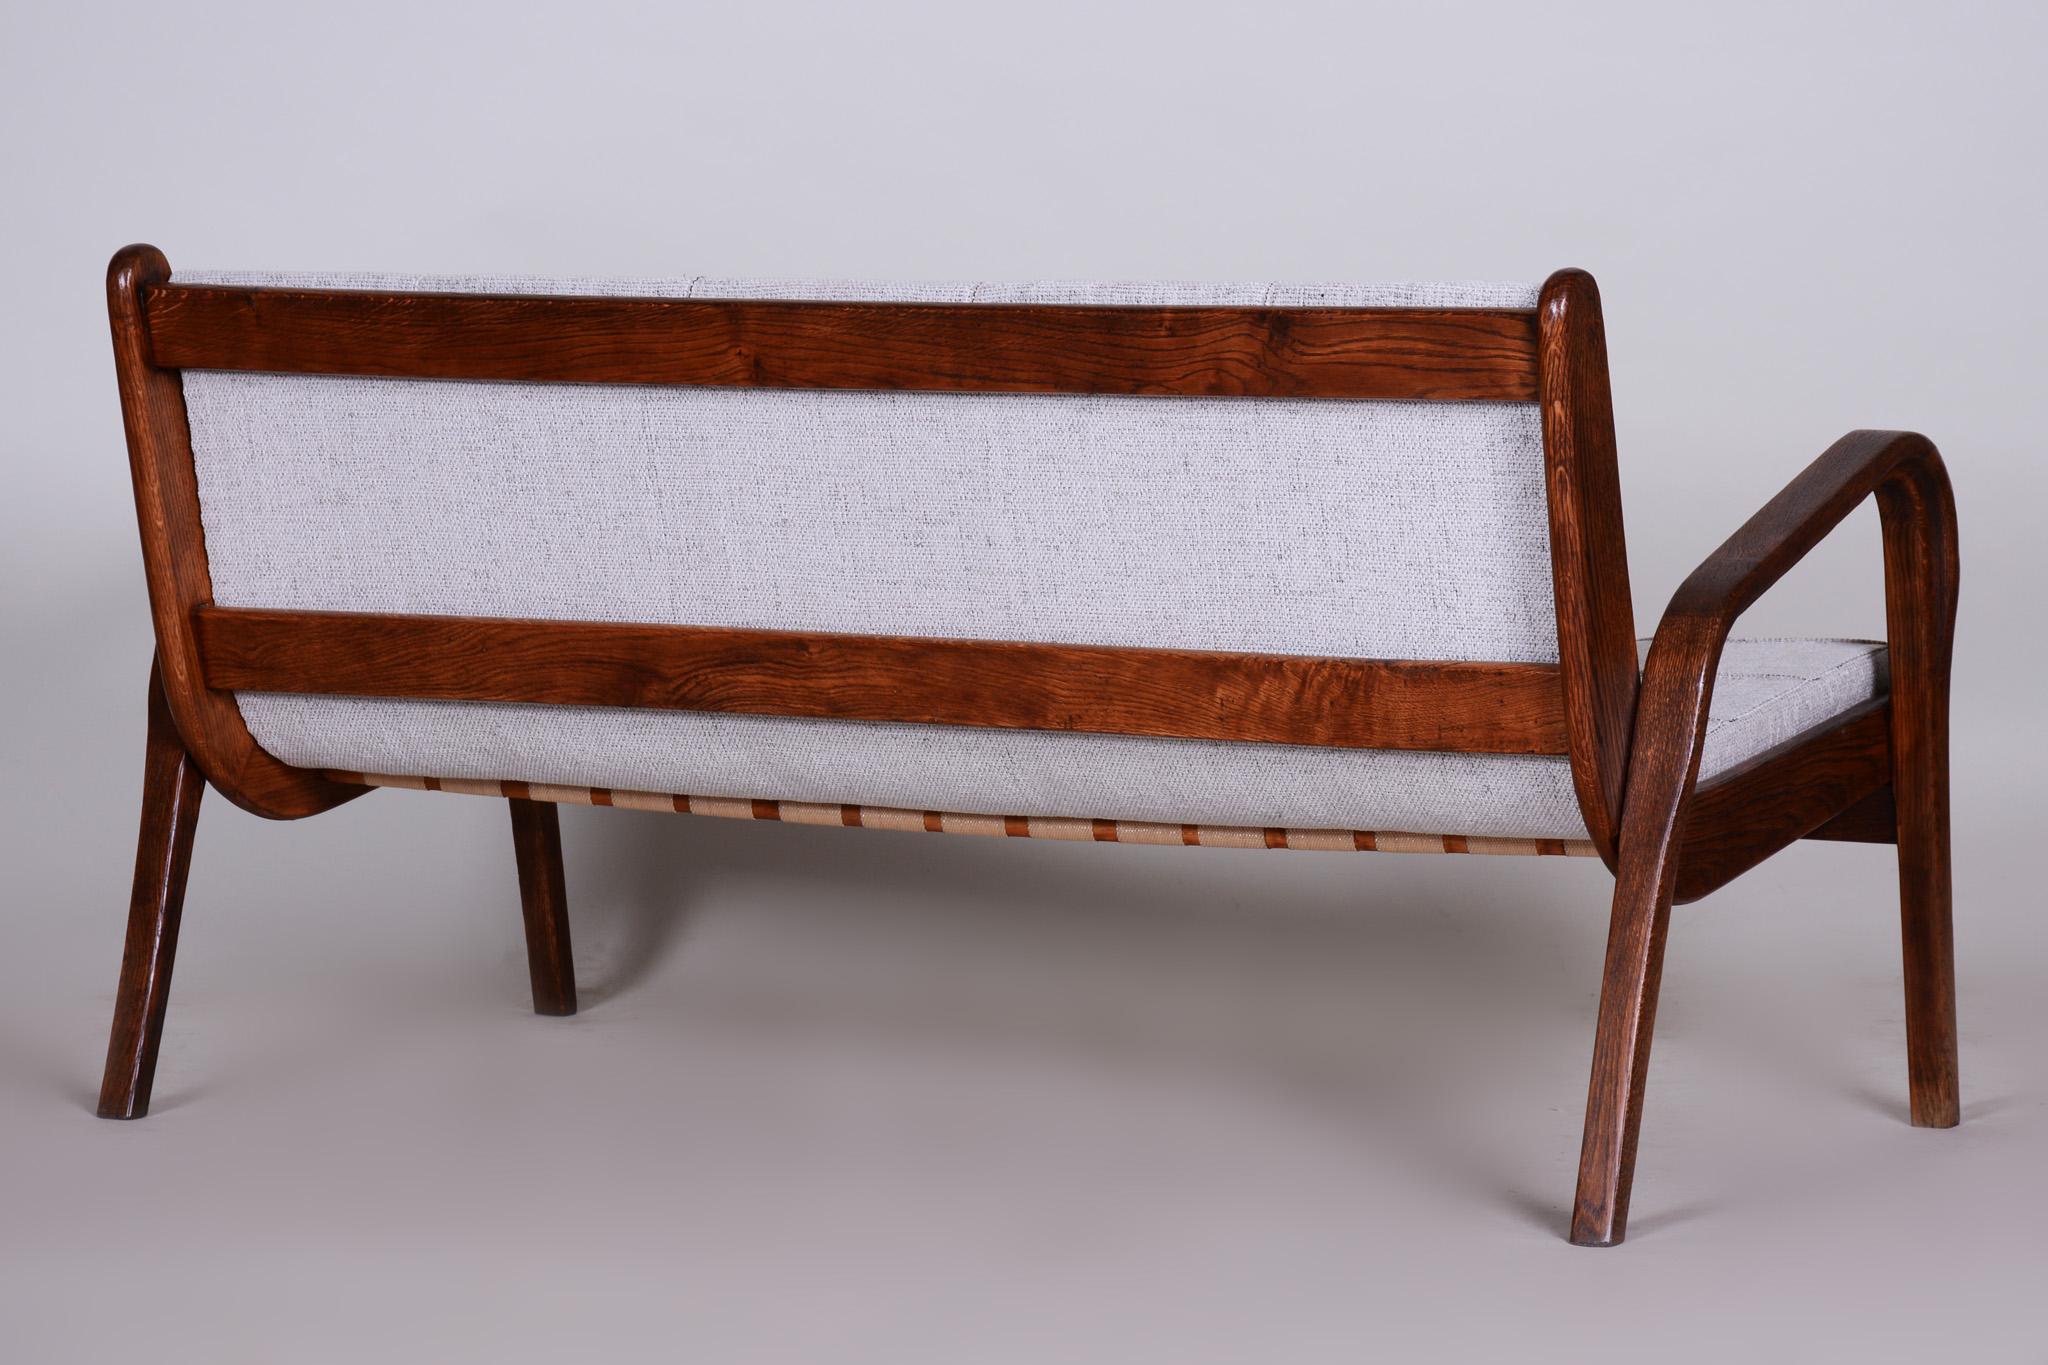 Czech Midcentury Brown Beech Sofa by Jan Vanek, New Upholstery, 1950s For Sale 3